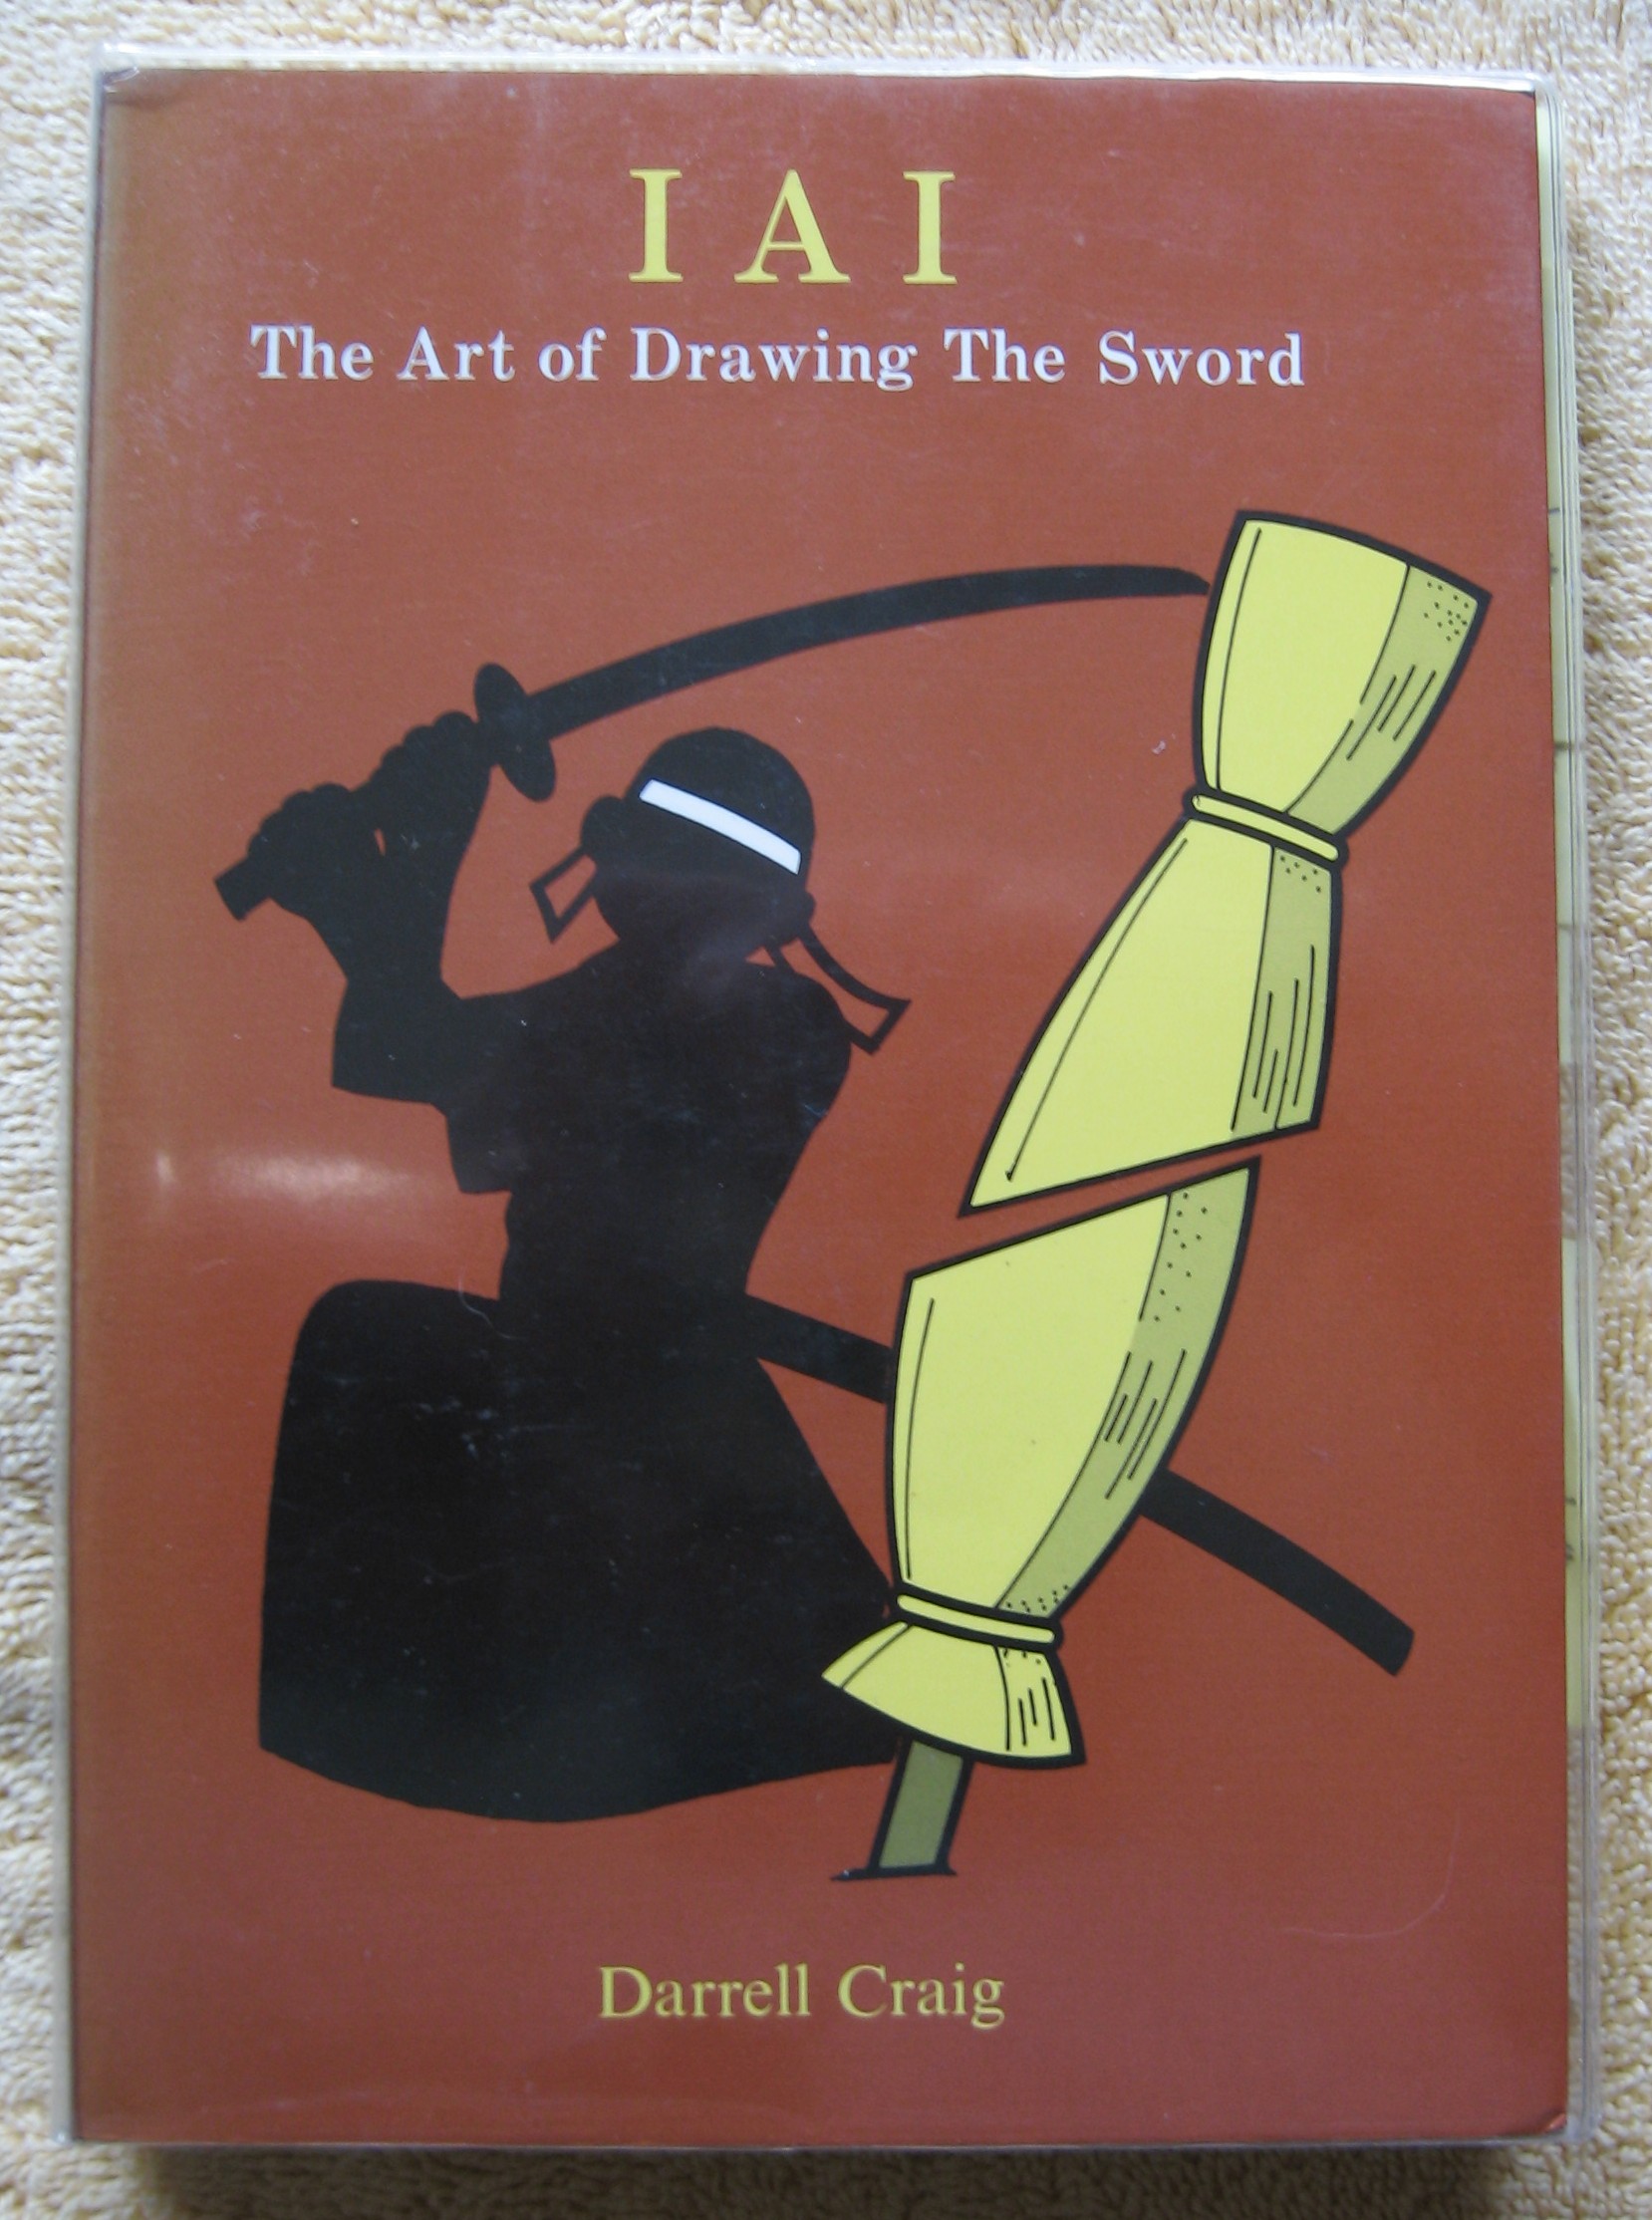 IAI, The Art of Drawing The Sword